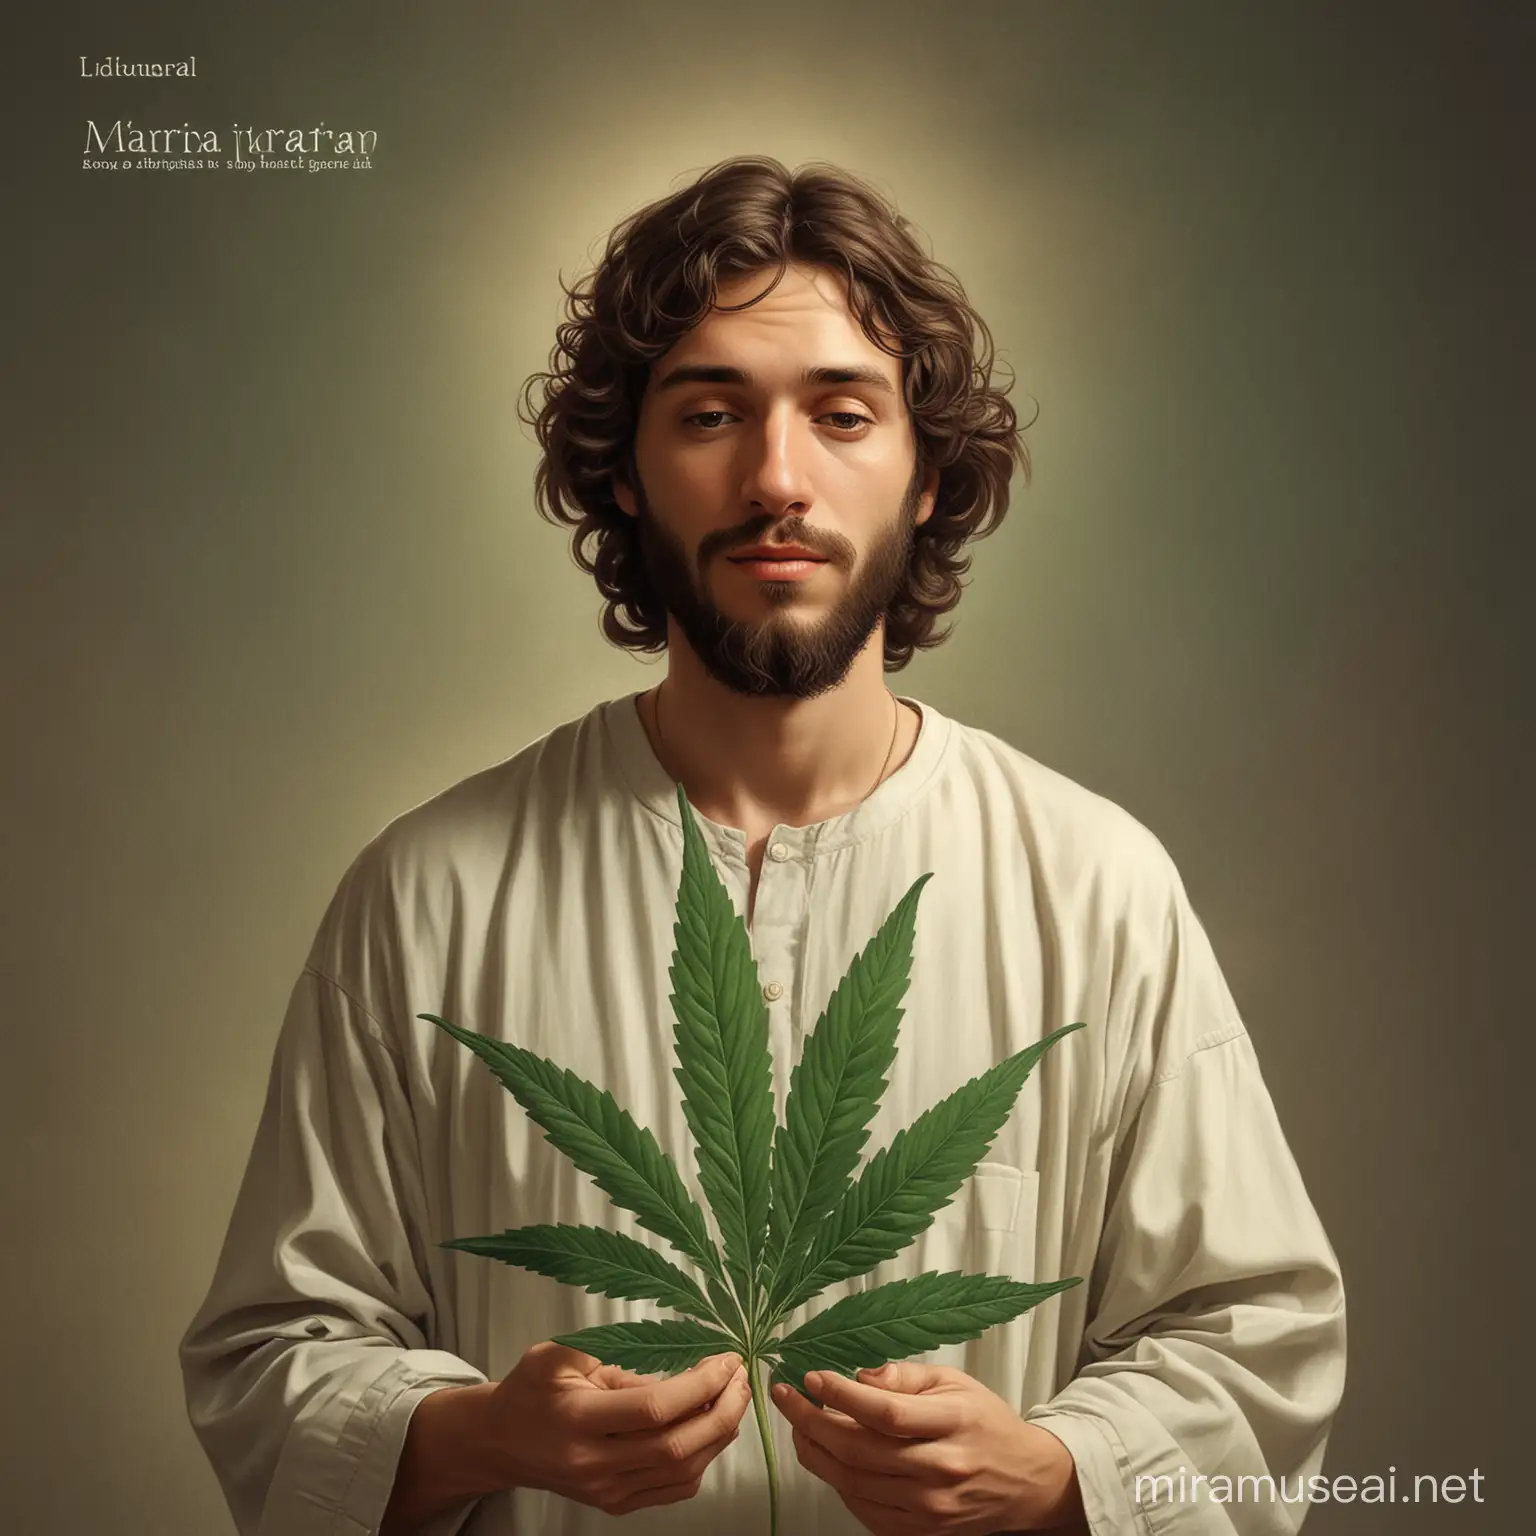 Biblically accurate interpretation of marijuana